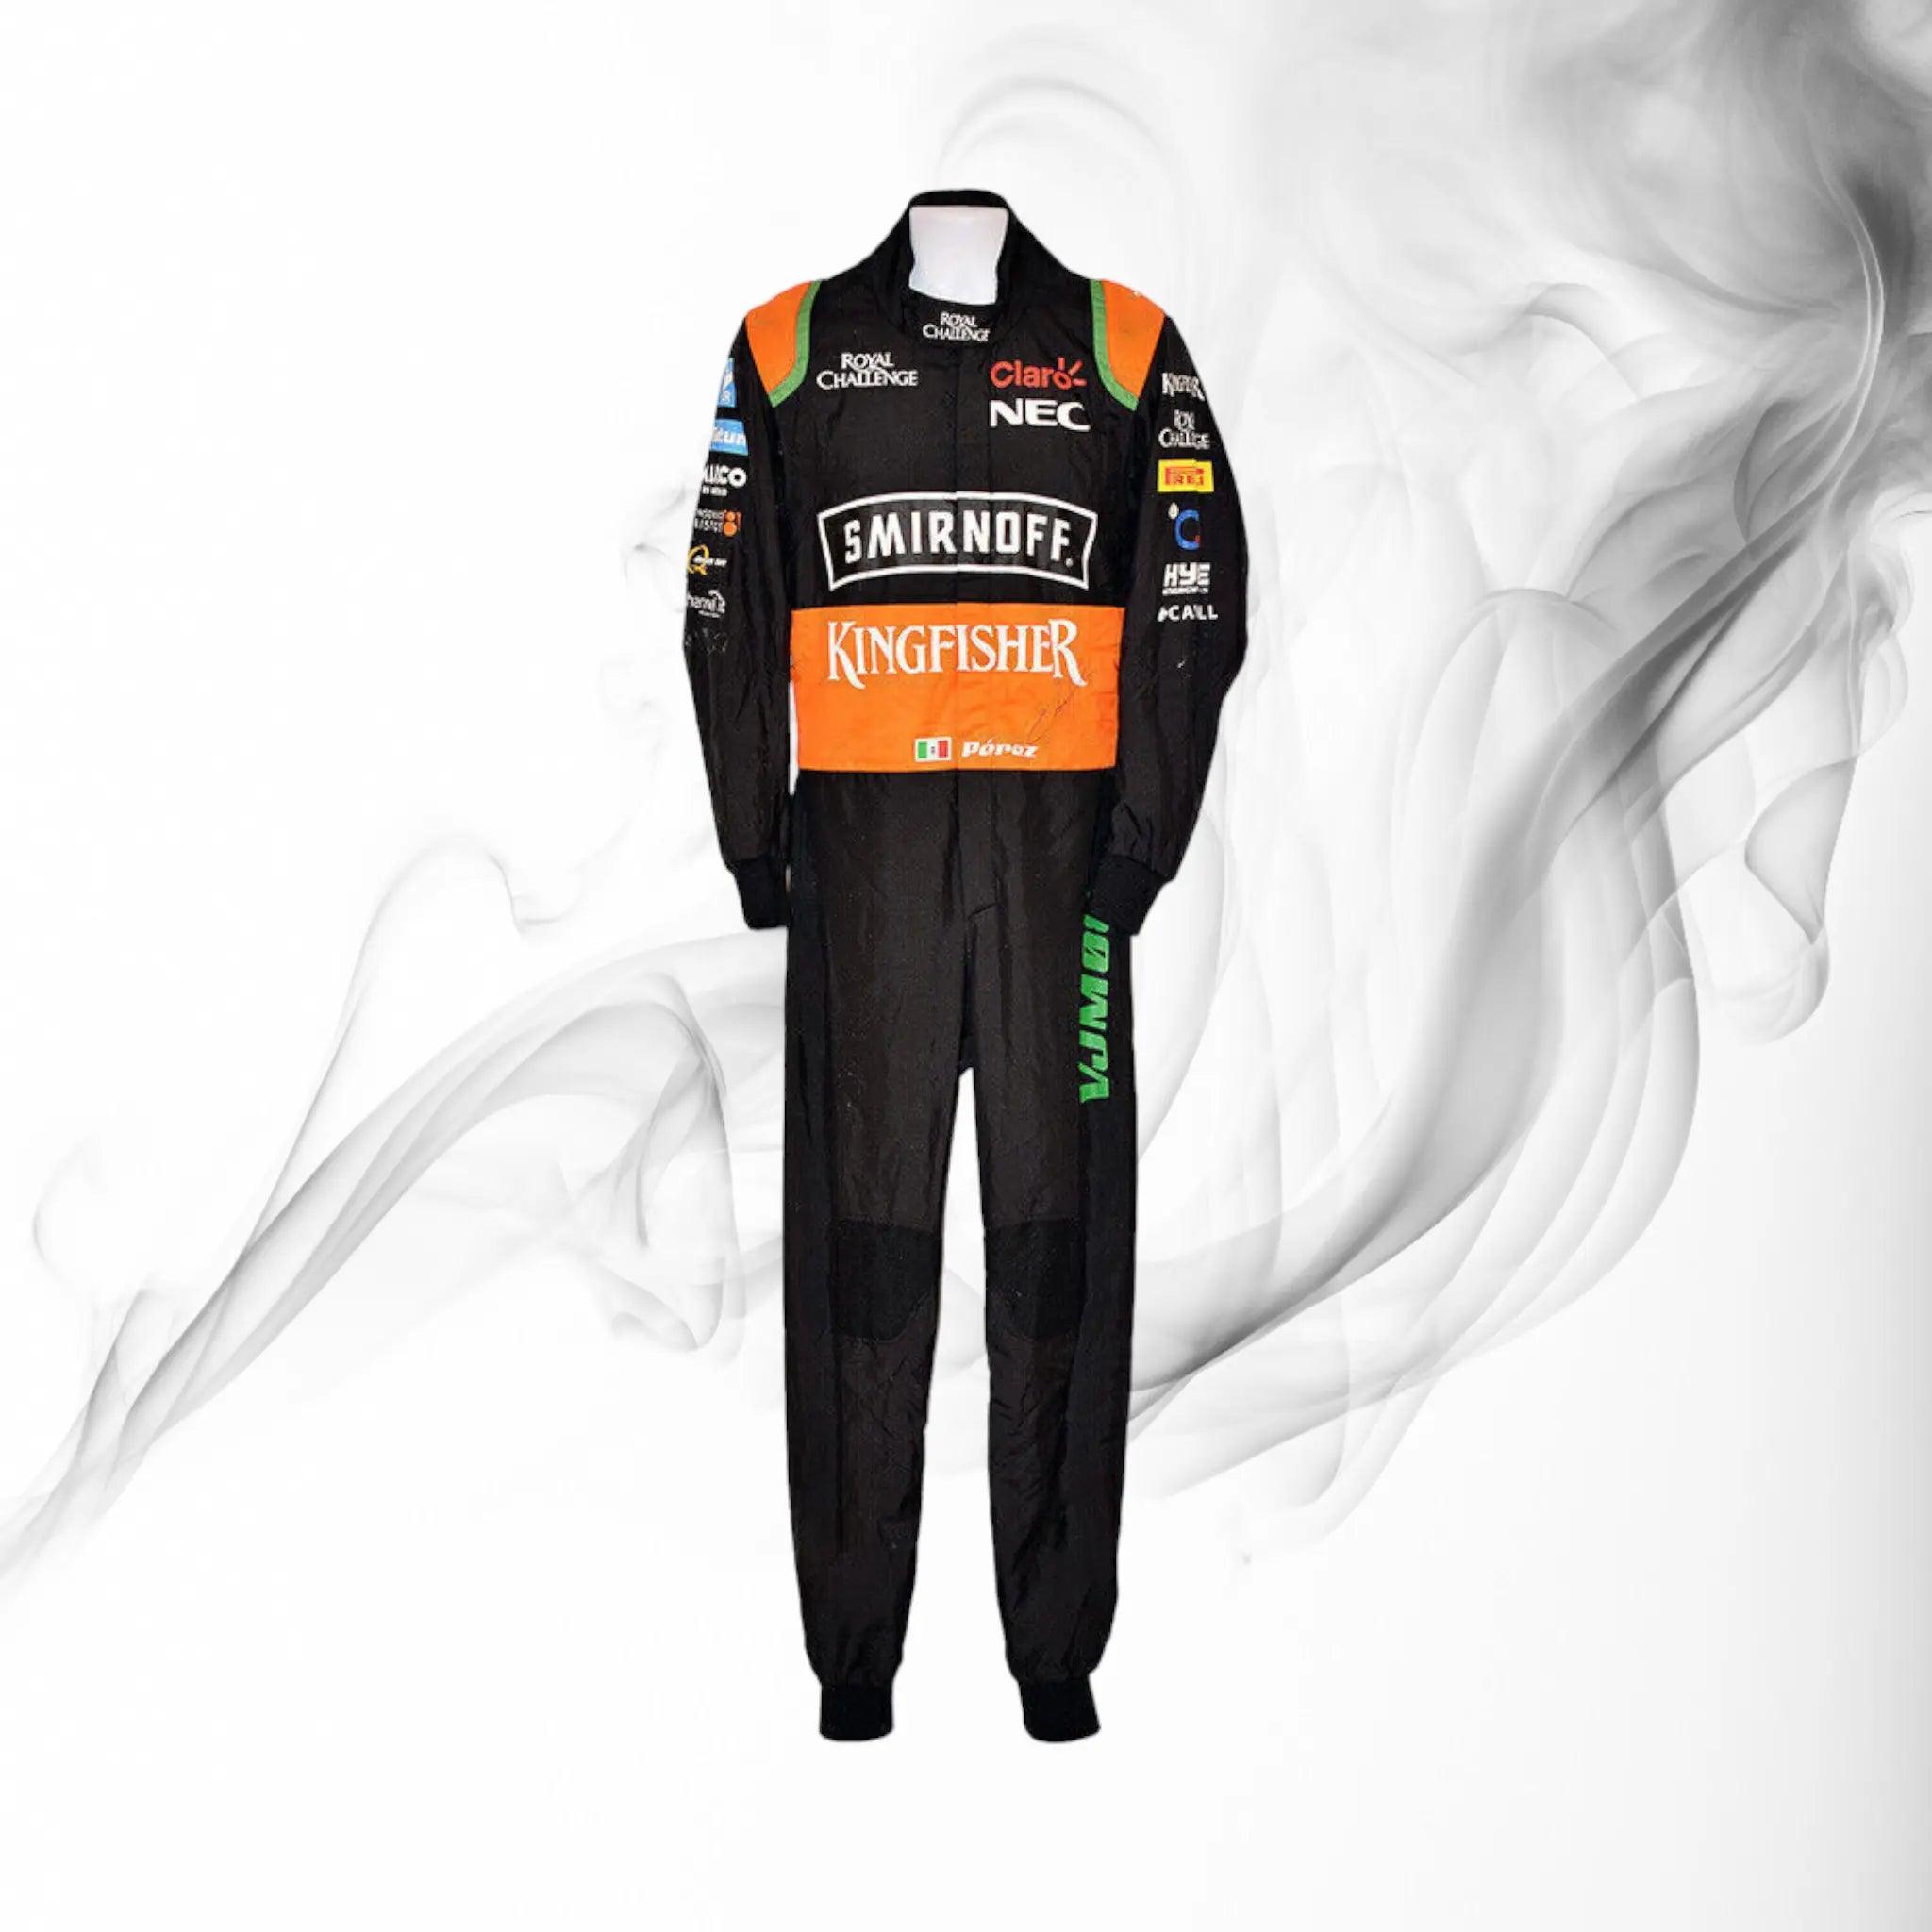 F1 Replica Printed Race Suits | Shop our Top Quality F1 Race Suit 